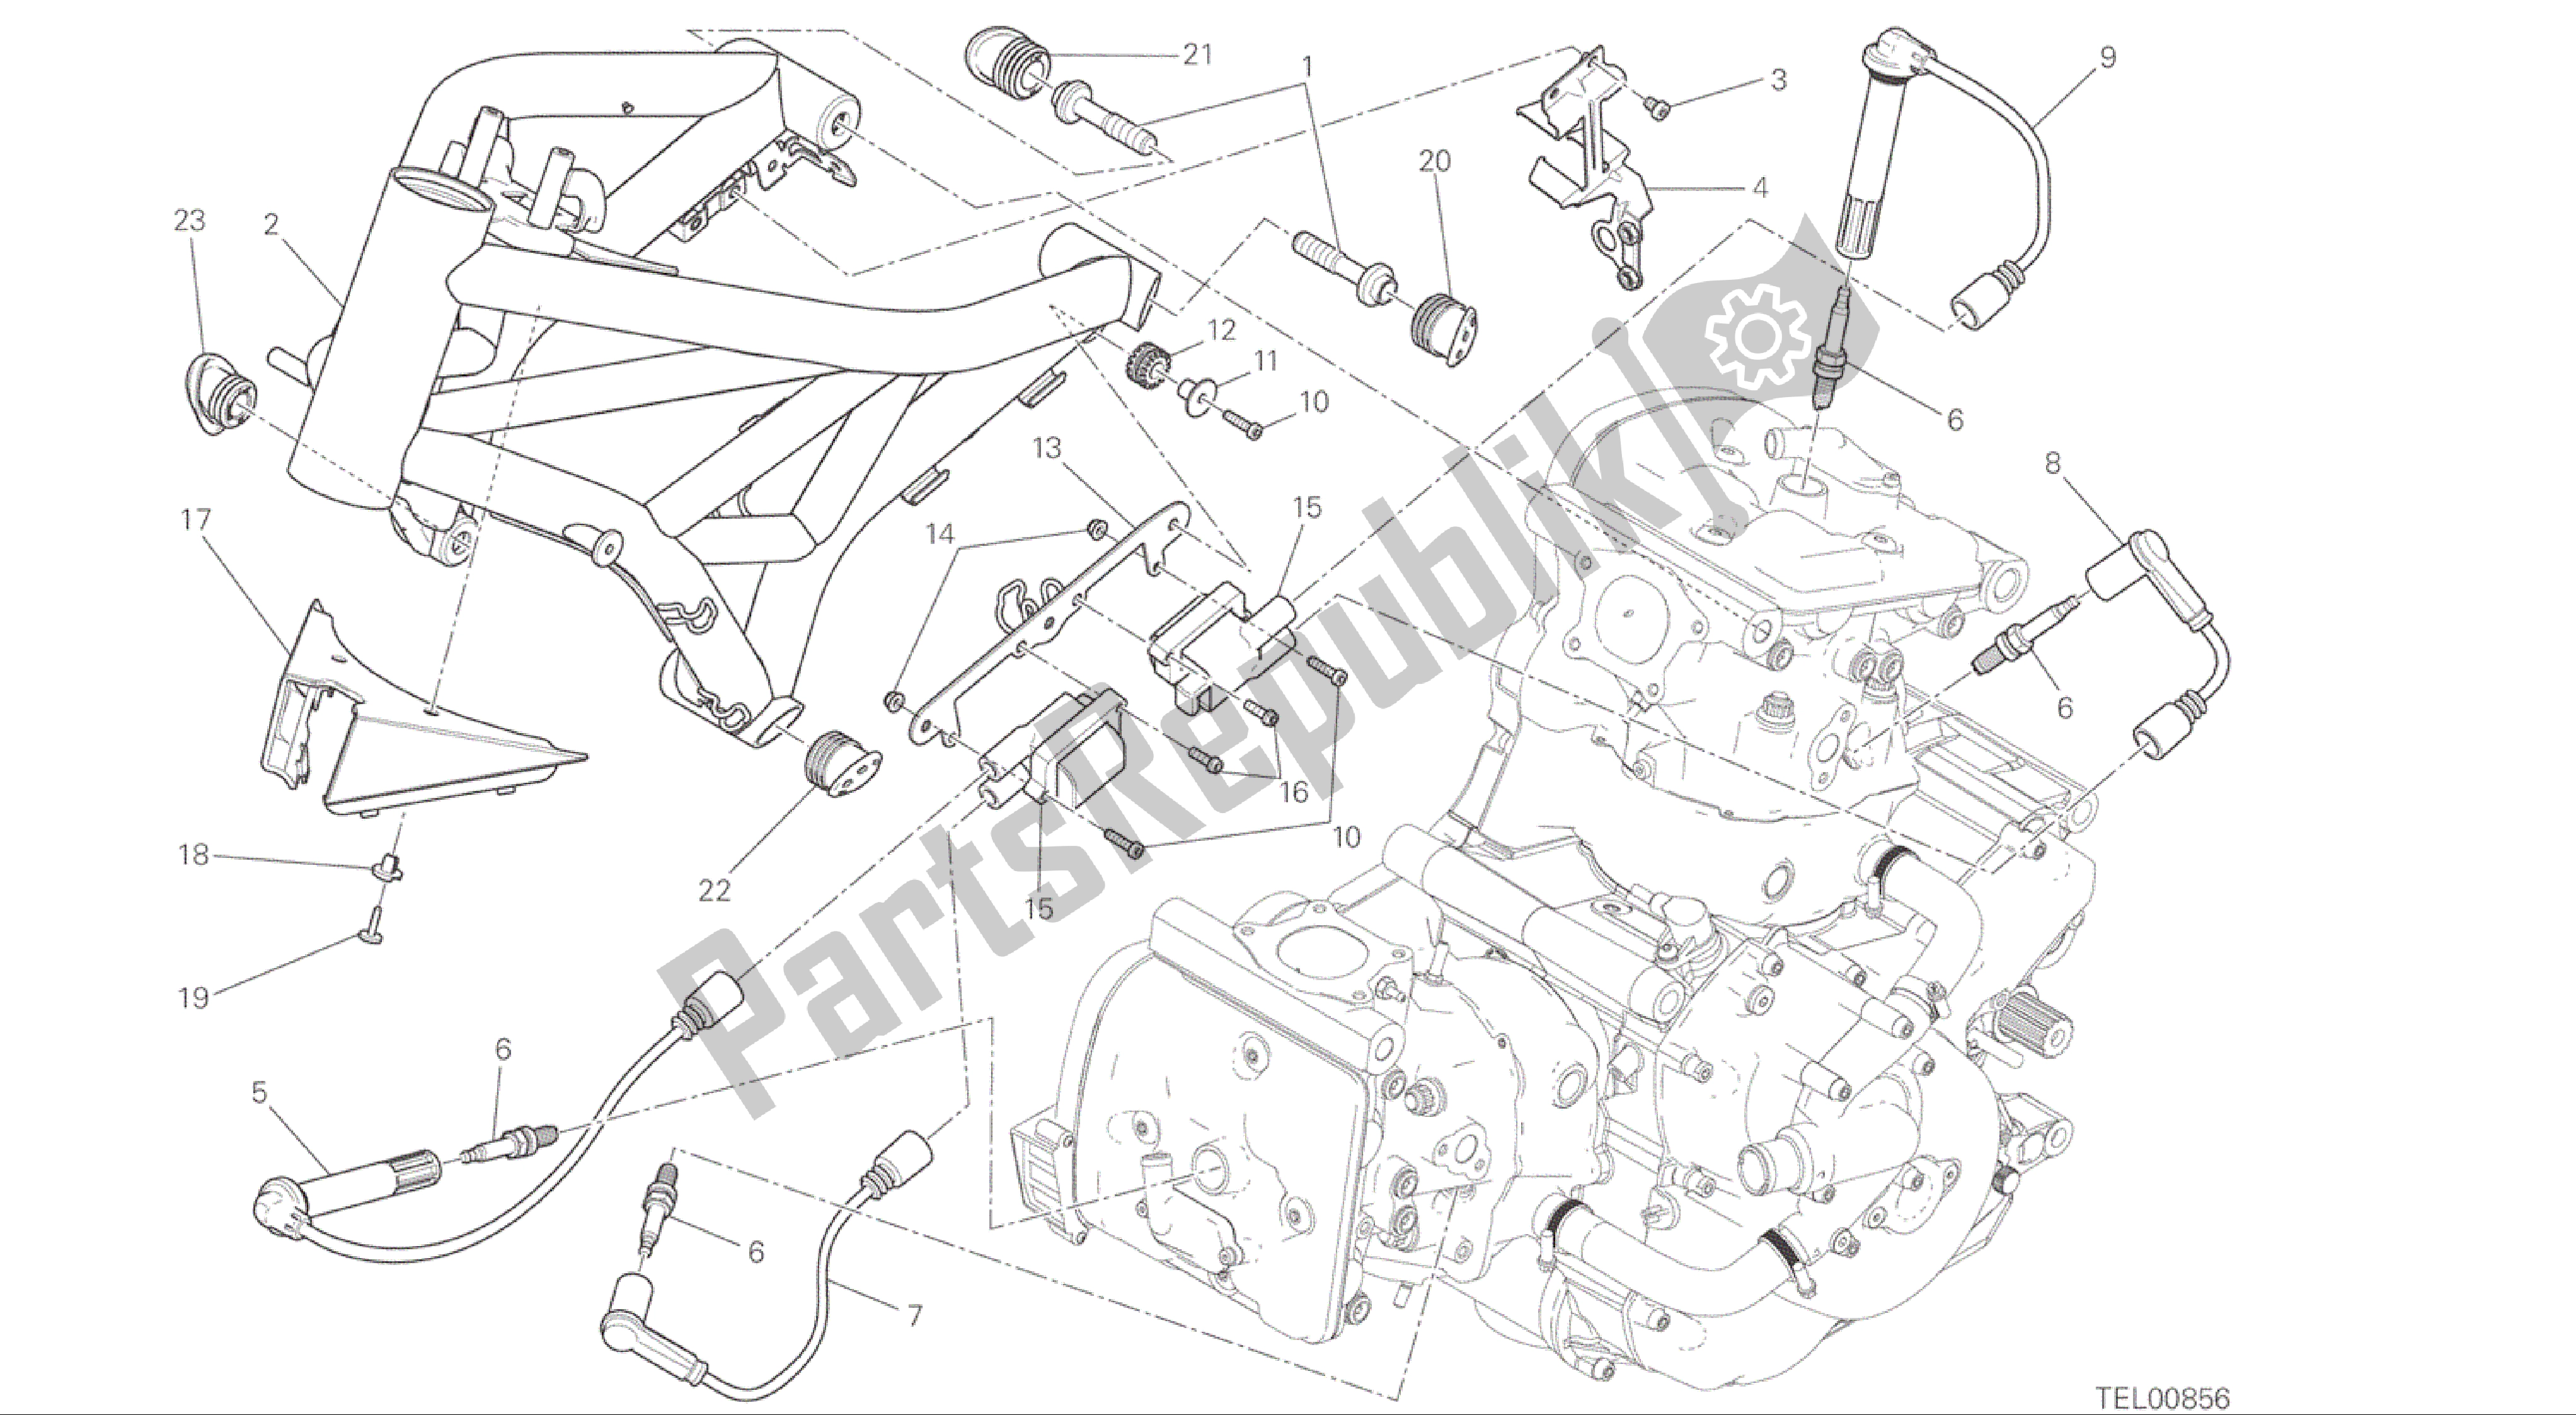 Todas las partes para Dibujo 022 - Marco Grupo [mod: M 1200] Marco de Ducati Monster 1200 2015